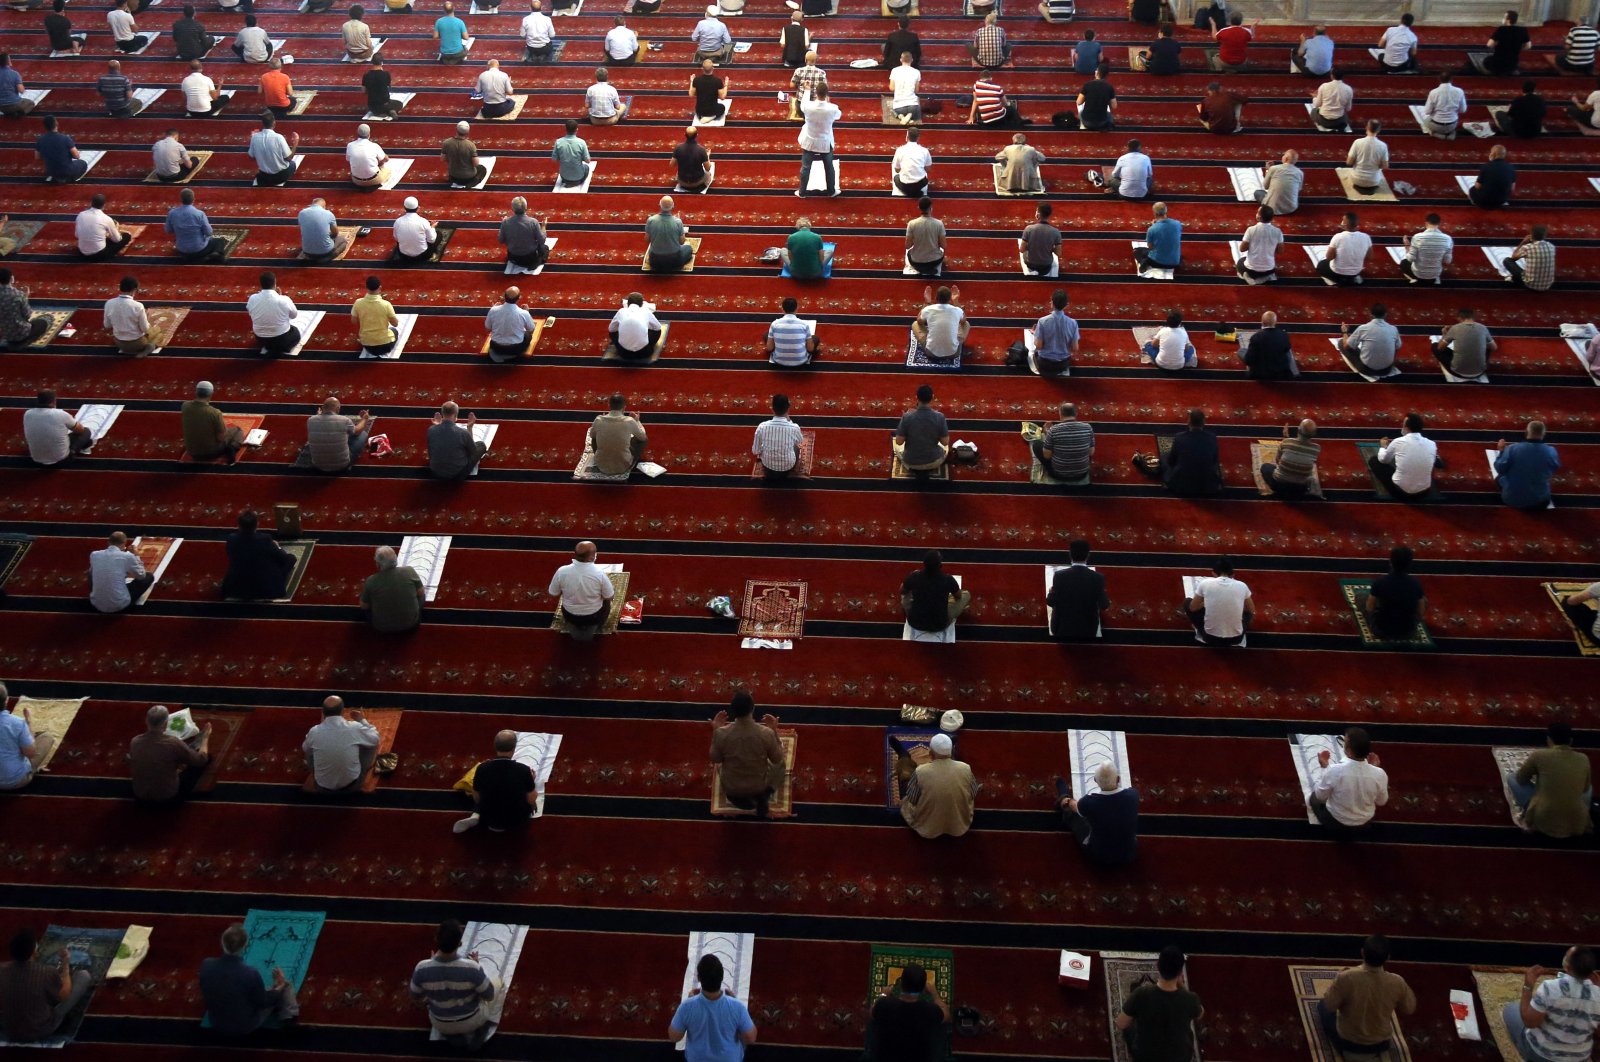 People perform Friday prayers at Kocatepe Mosque, in the capital Ankara, Turkey, June 26, 2020. (PHOTO BY ALİ EKEYILMAZ)